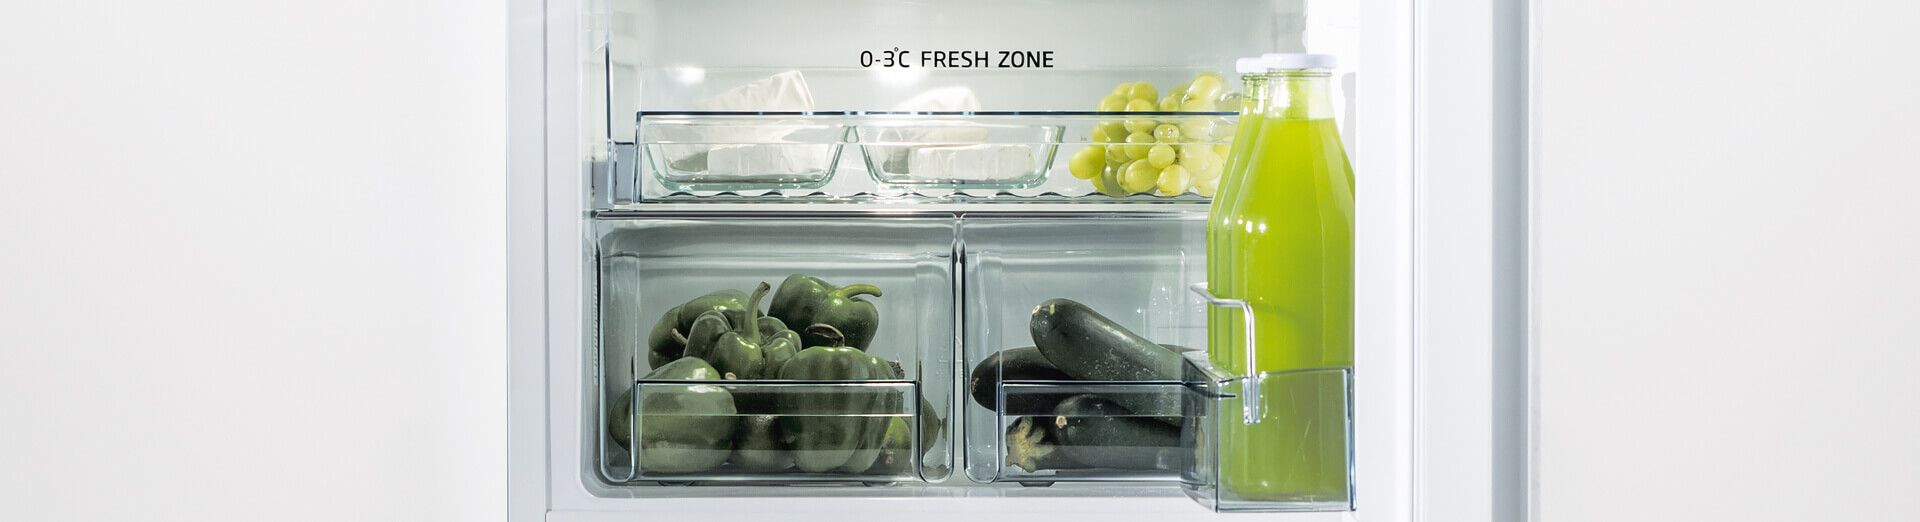 integrated fridge freezer top image